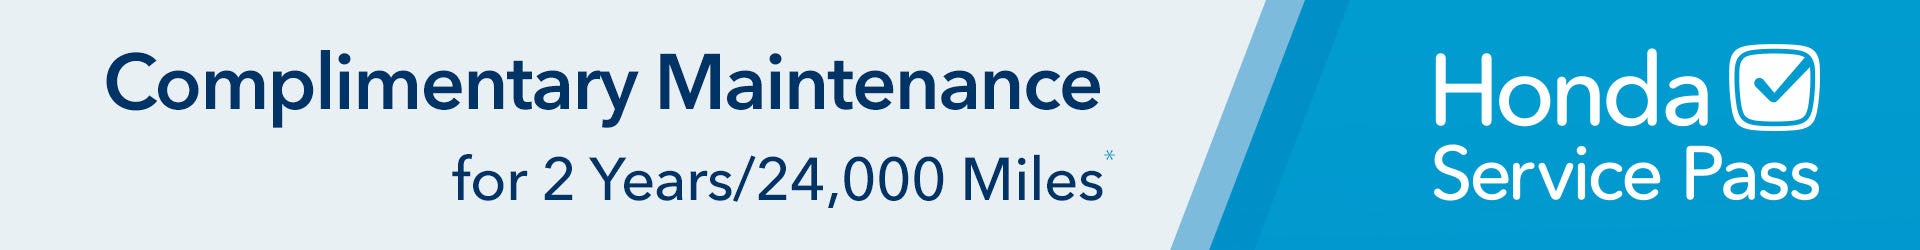 Complimentary Maintenance for 2 years / 24,000 Miles Honda Service Pass | Carl Hogan Honda in Columbus MS